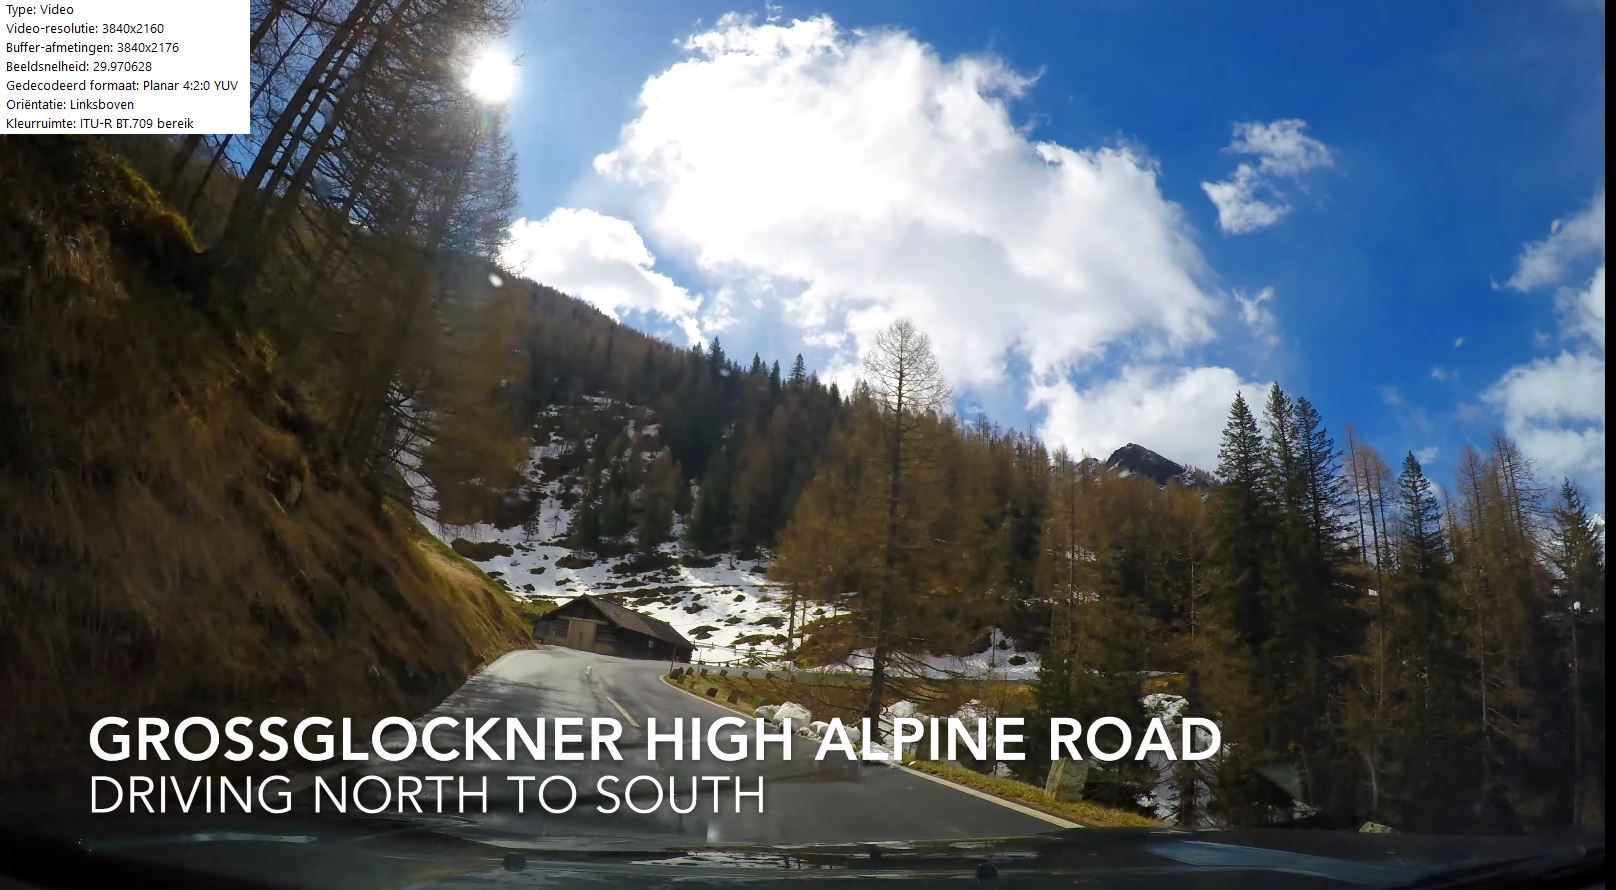 [REPOST] Epic ride over the Grossglockner High Alpine Road in 4K